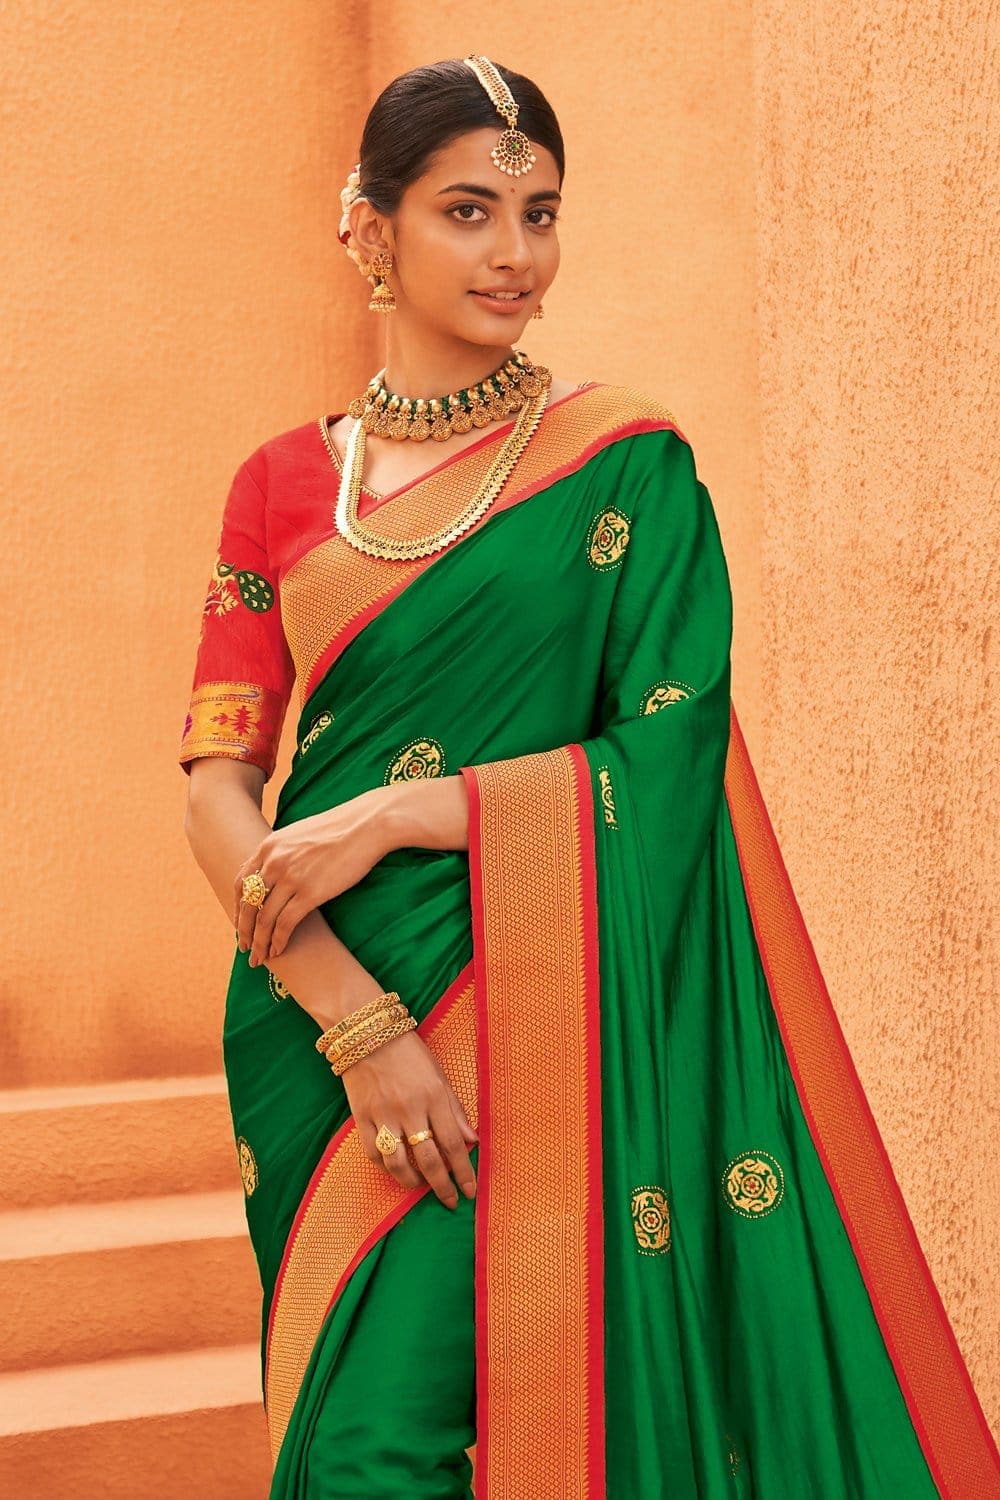 Green/Red Pan India Green saree with red border silk saree at Rs